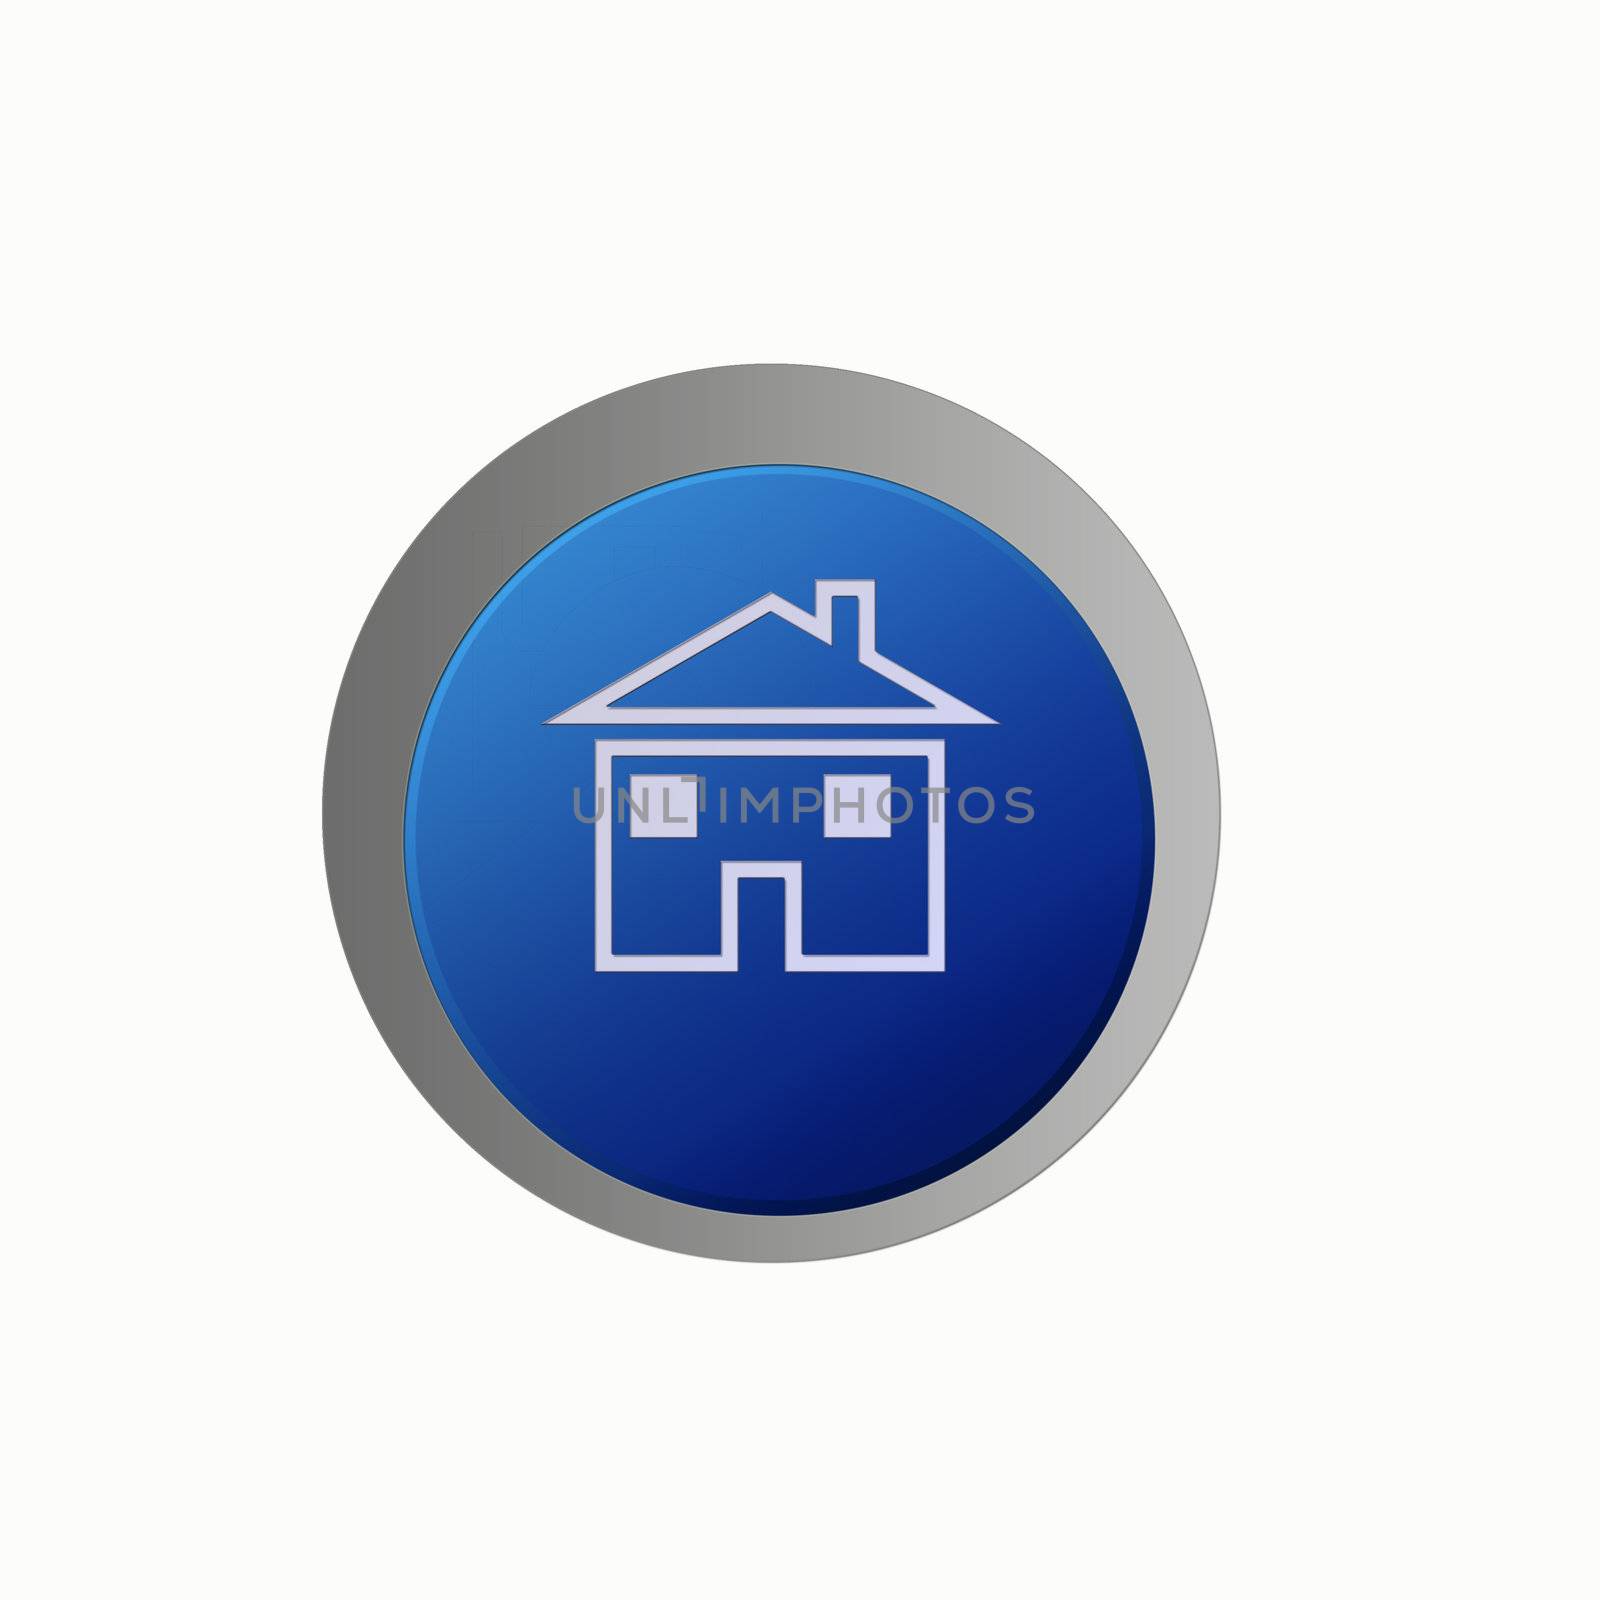 Aqua Button - Home,download,web design,internet.